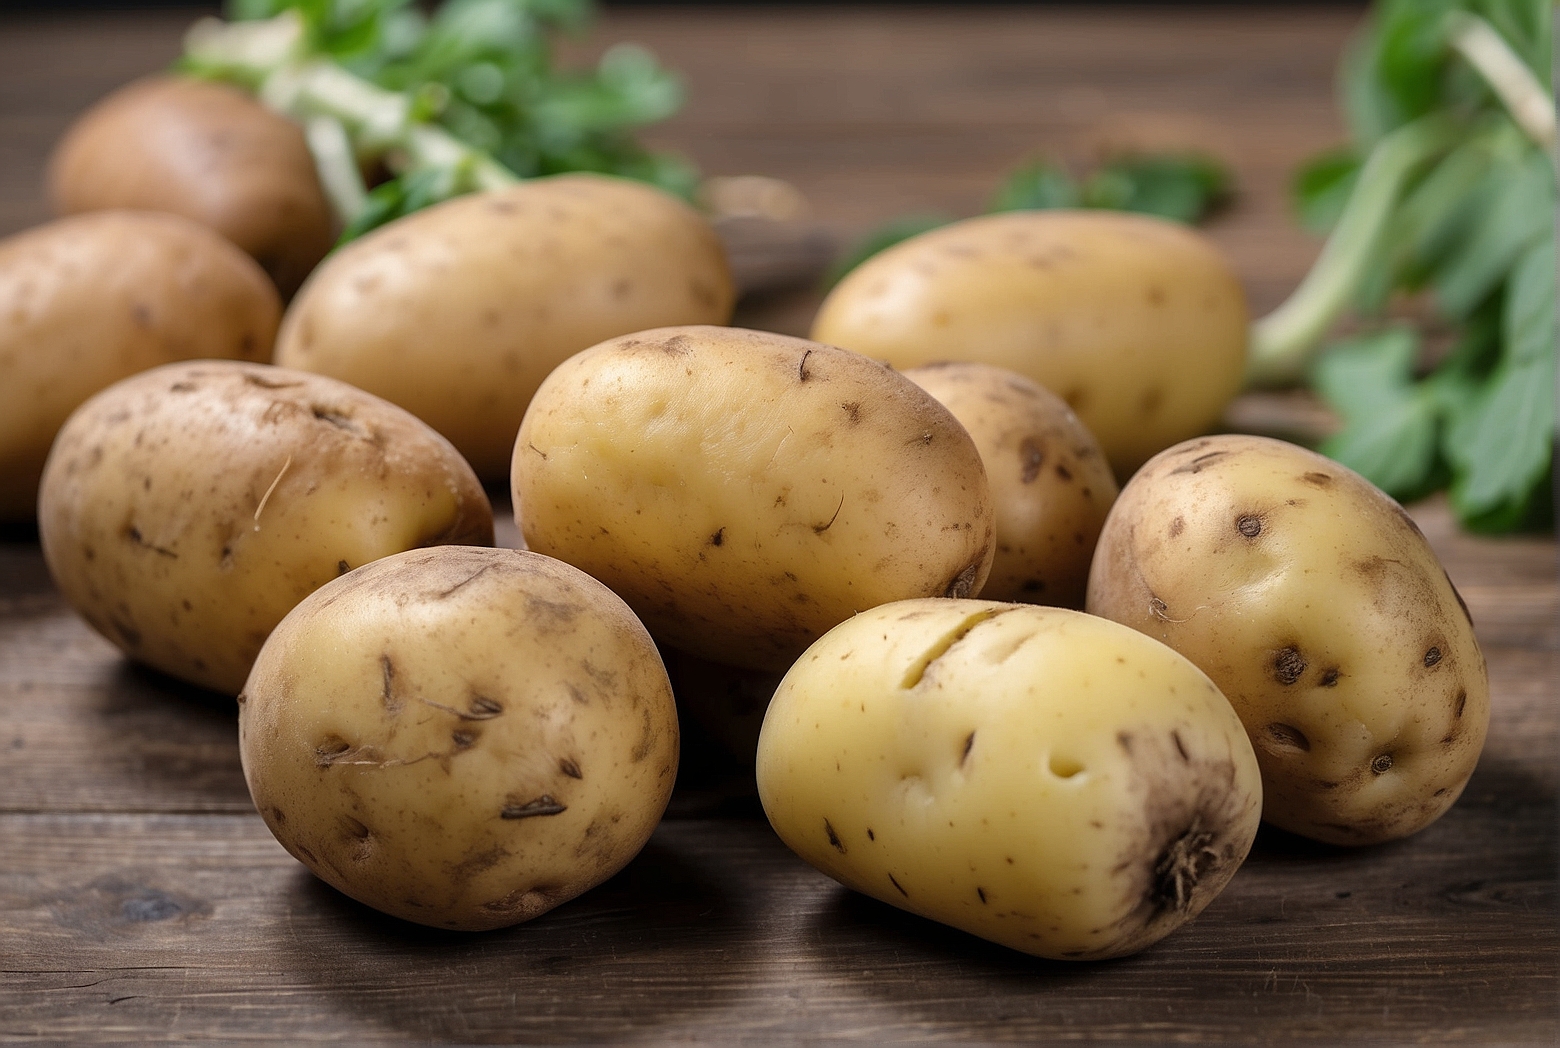 Default Are russet potatoes GMO 1